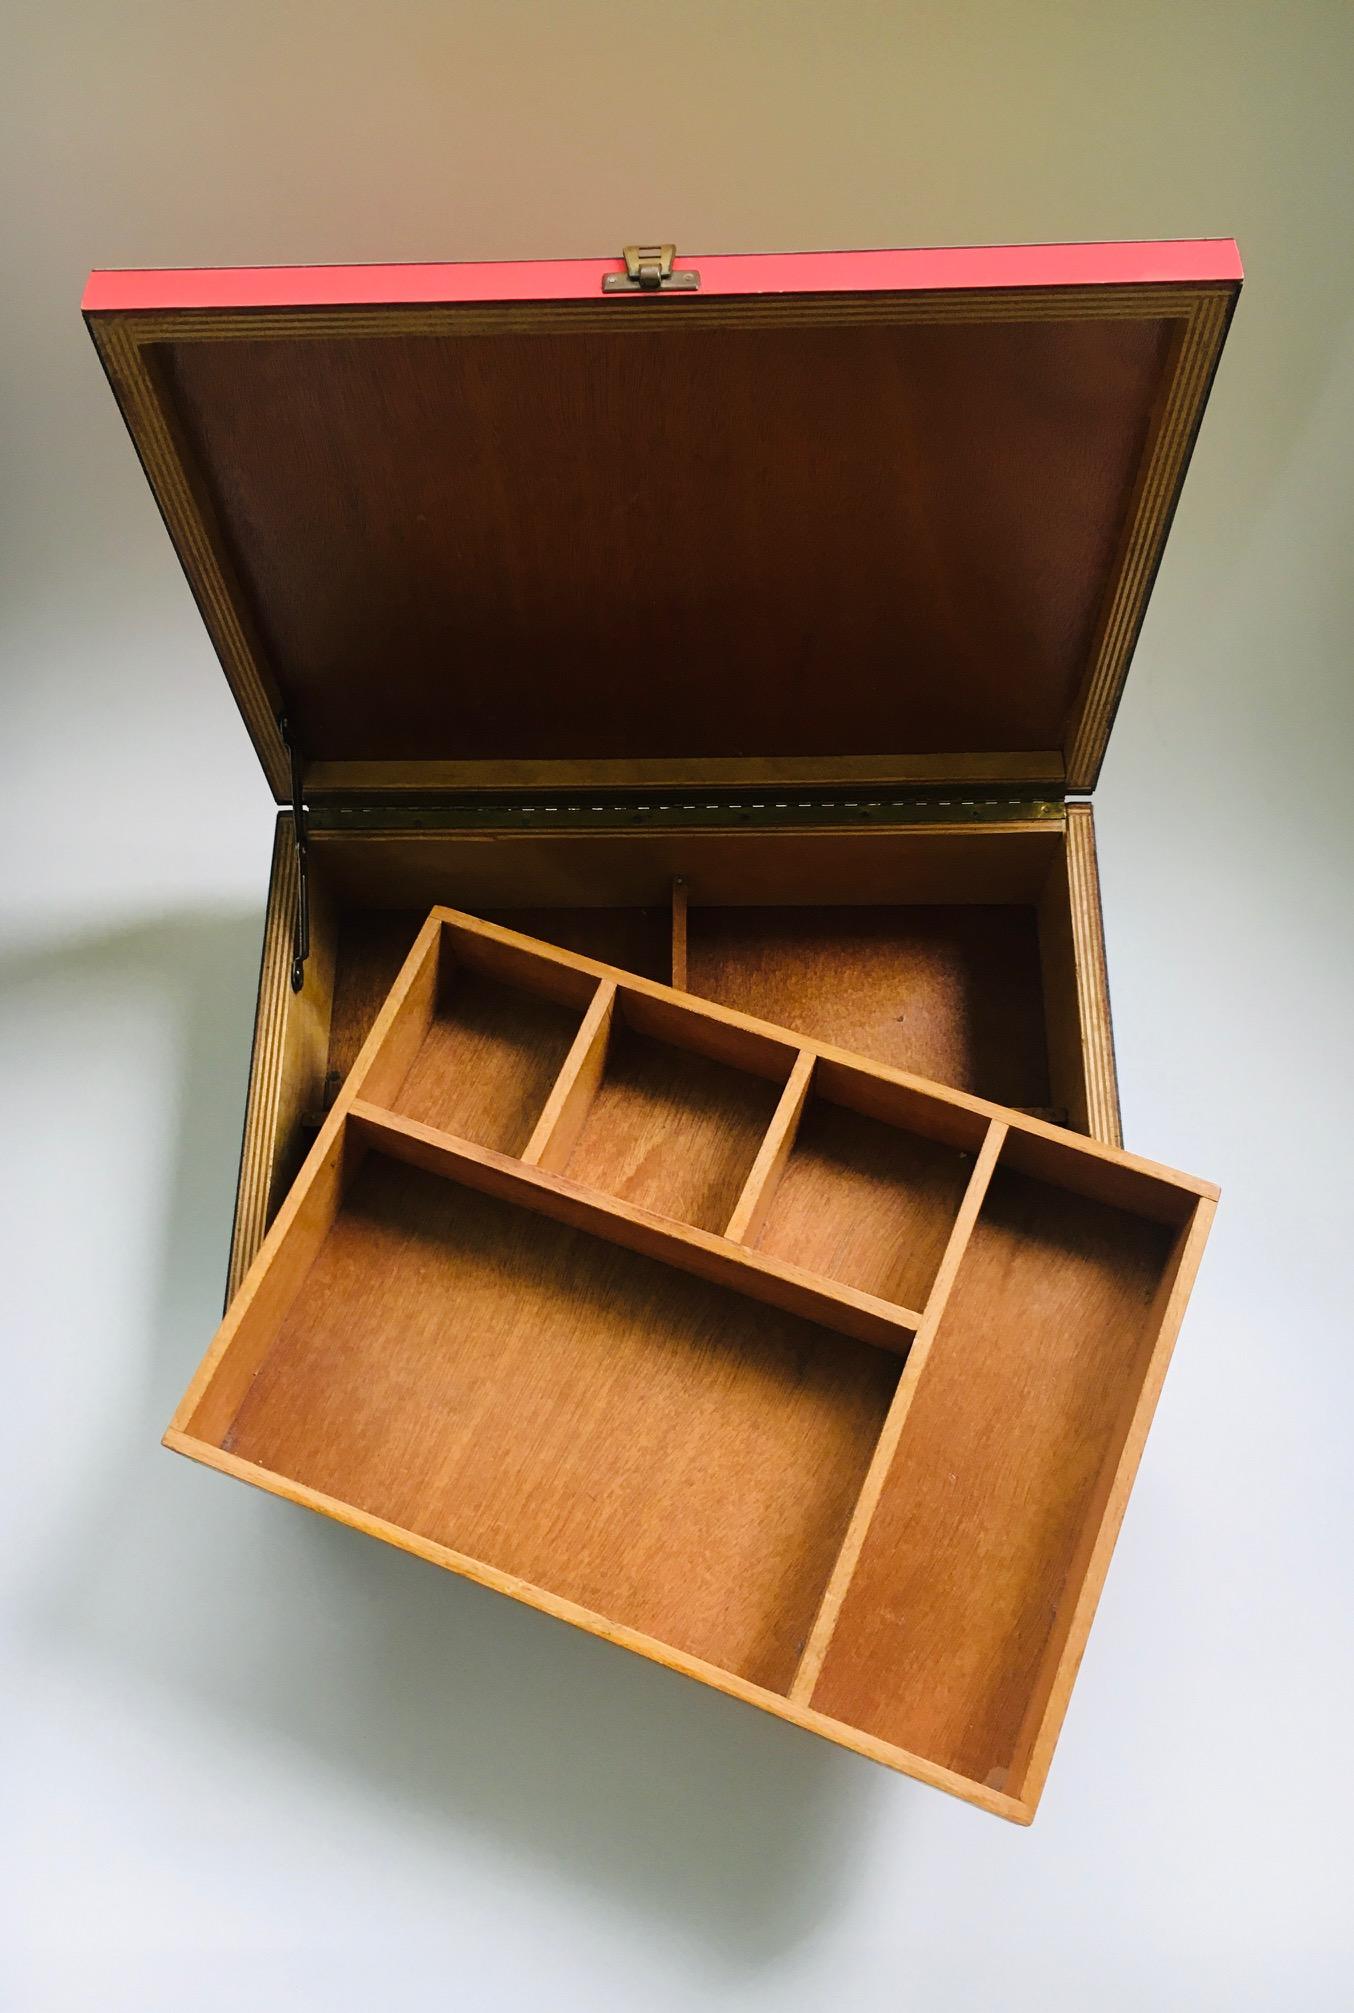 Midcentury Modern Dutch Design STIJL Modernism Letter Box, 1950's Holland For Sale 1